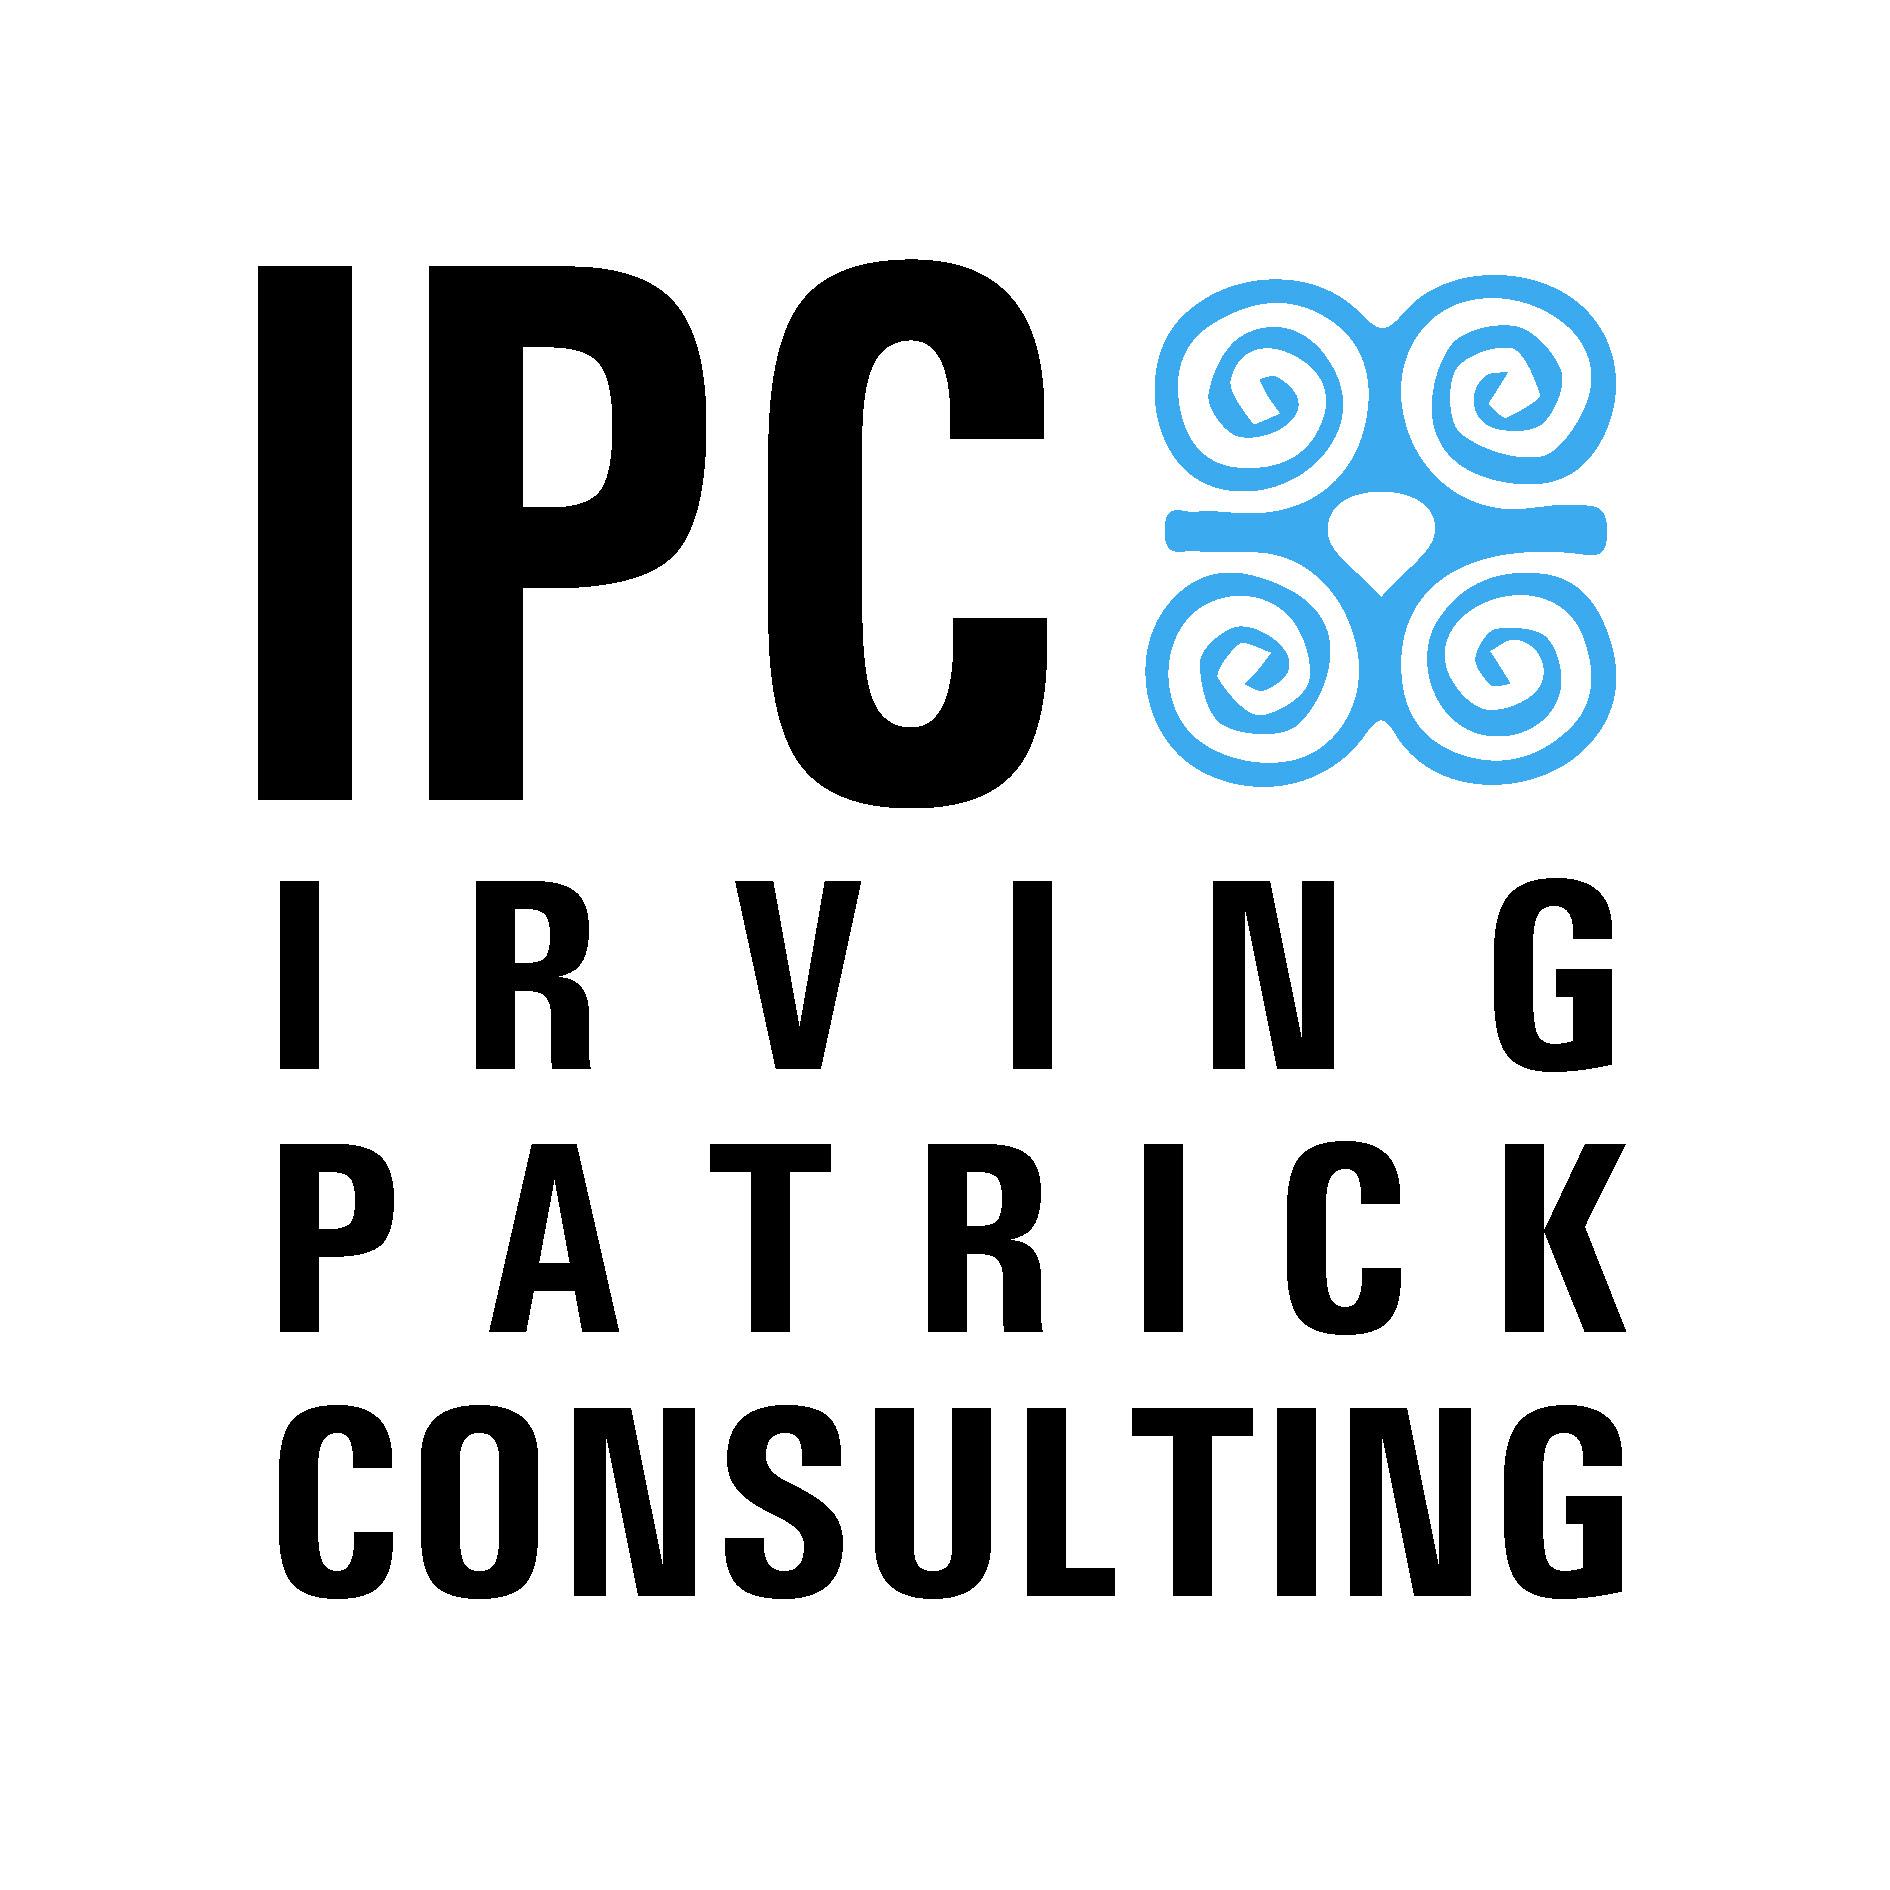 Irving Patrick Consulting Ltd company logo